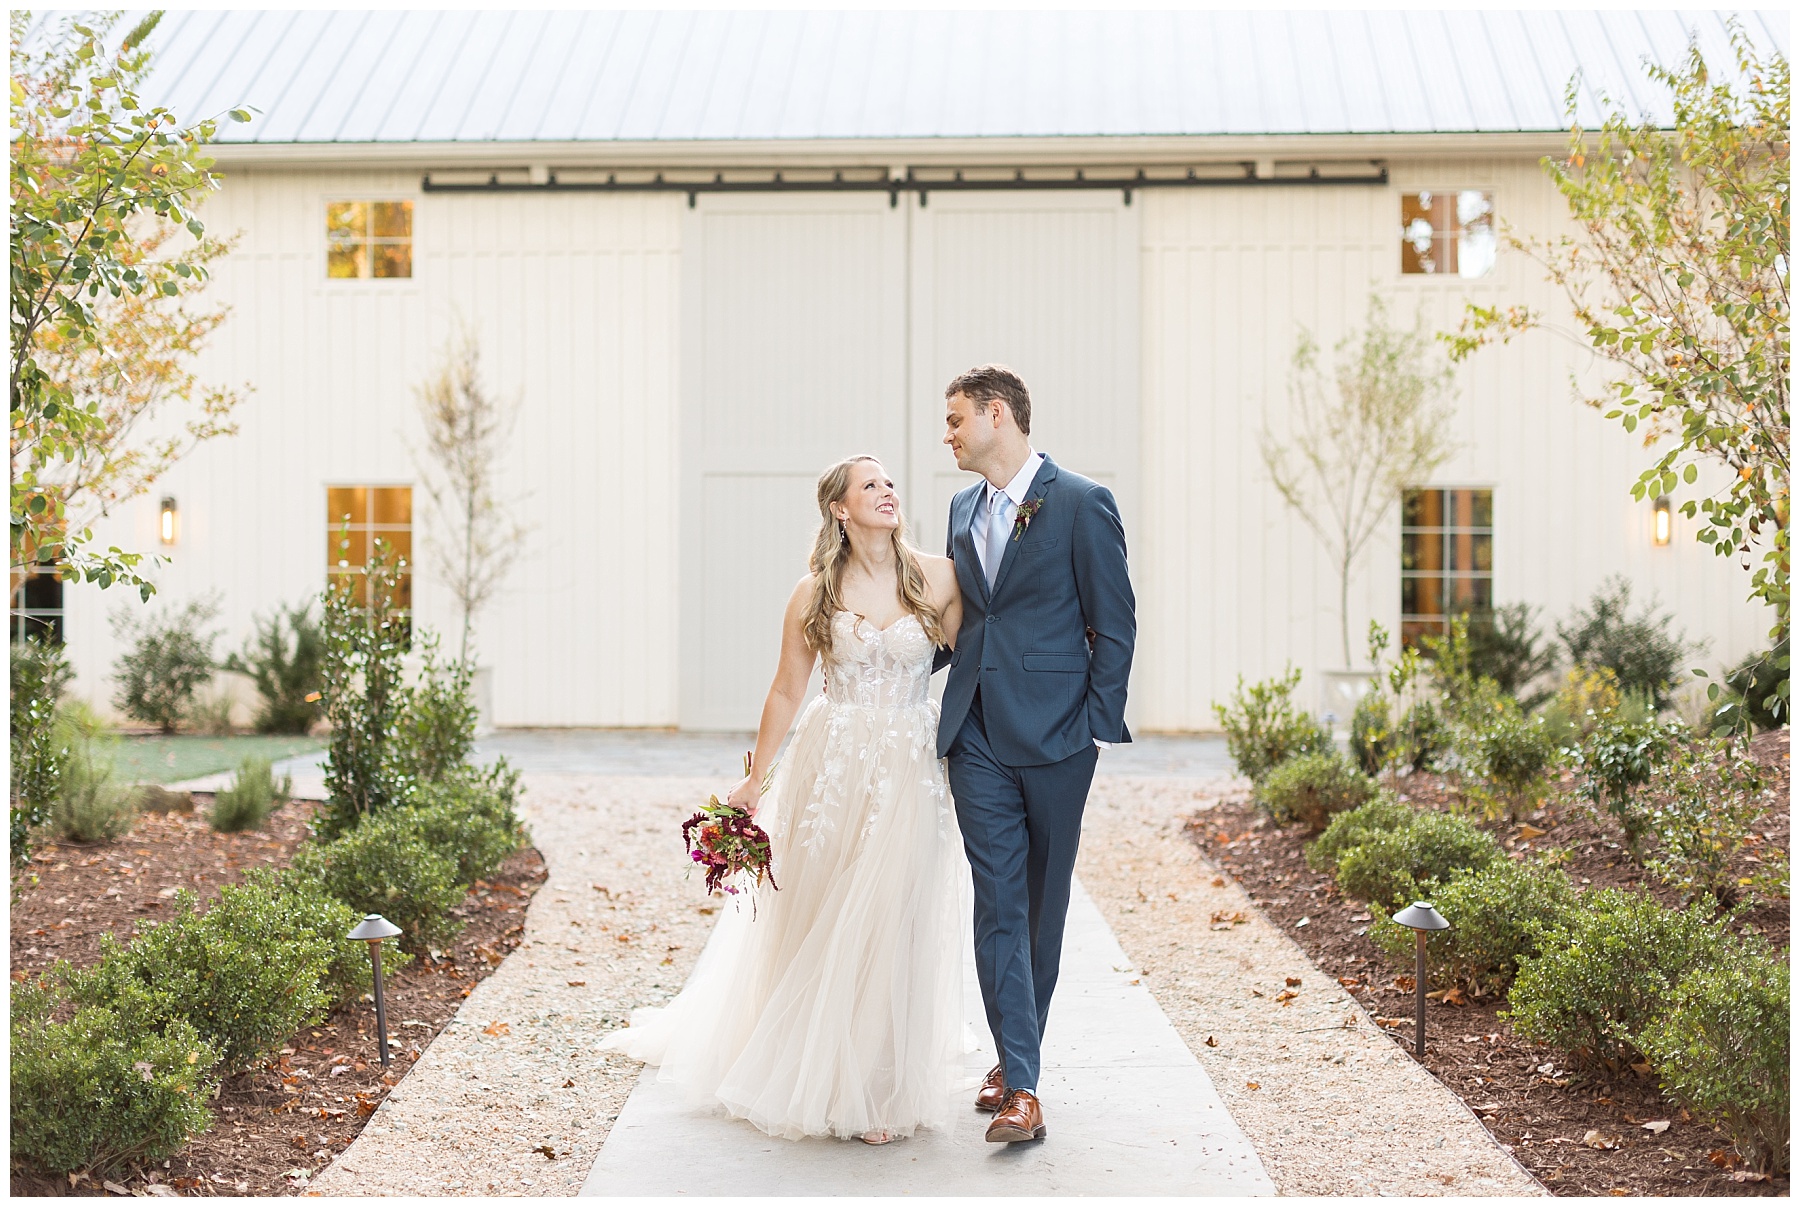 Fall wedding inspiration at a white modern barn style venue in Hillsborough, NC | Carolina Grove | Raleigh Wedding Photographer